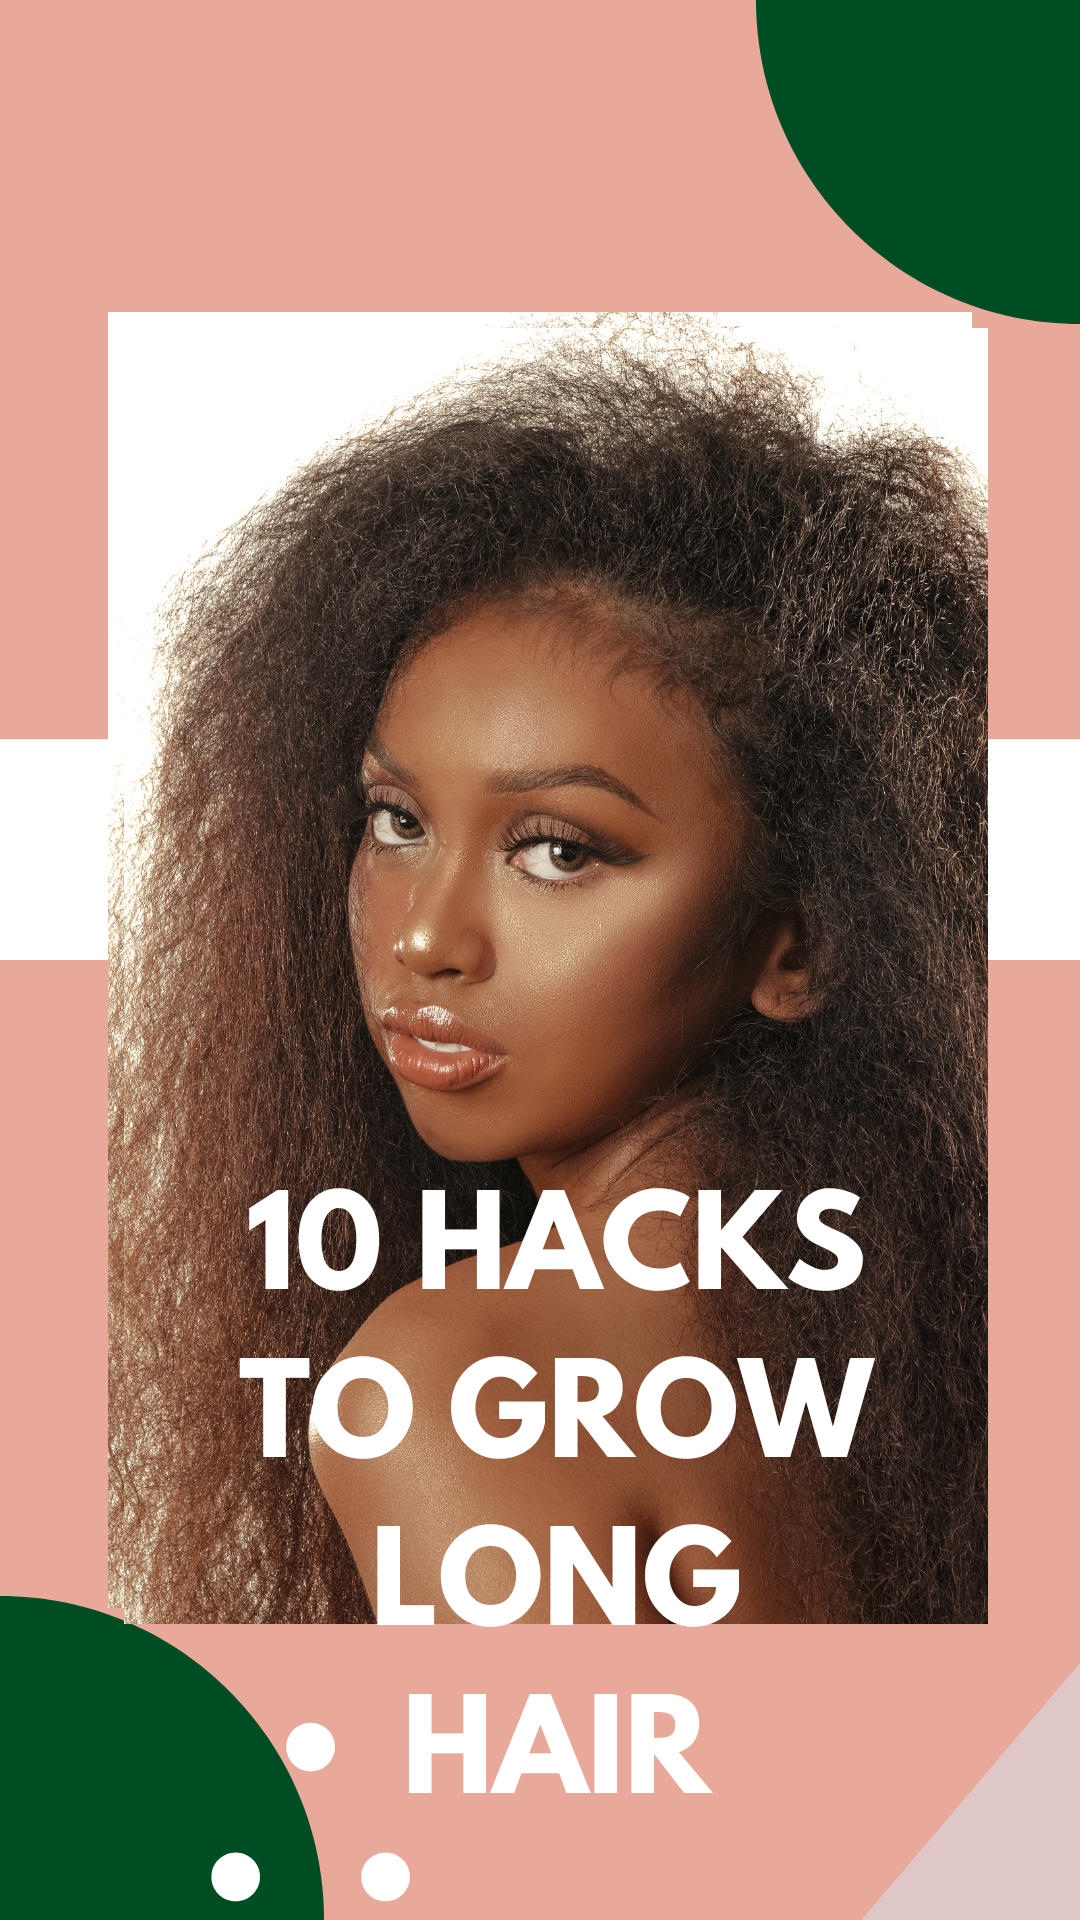 How to grow long afro hair? 10 hacks!